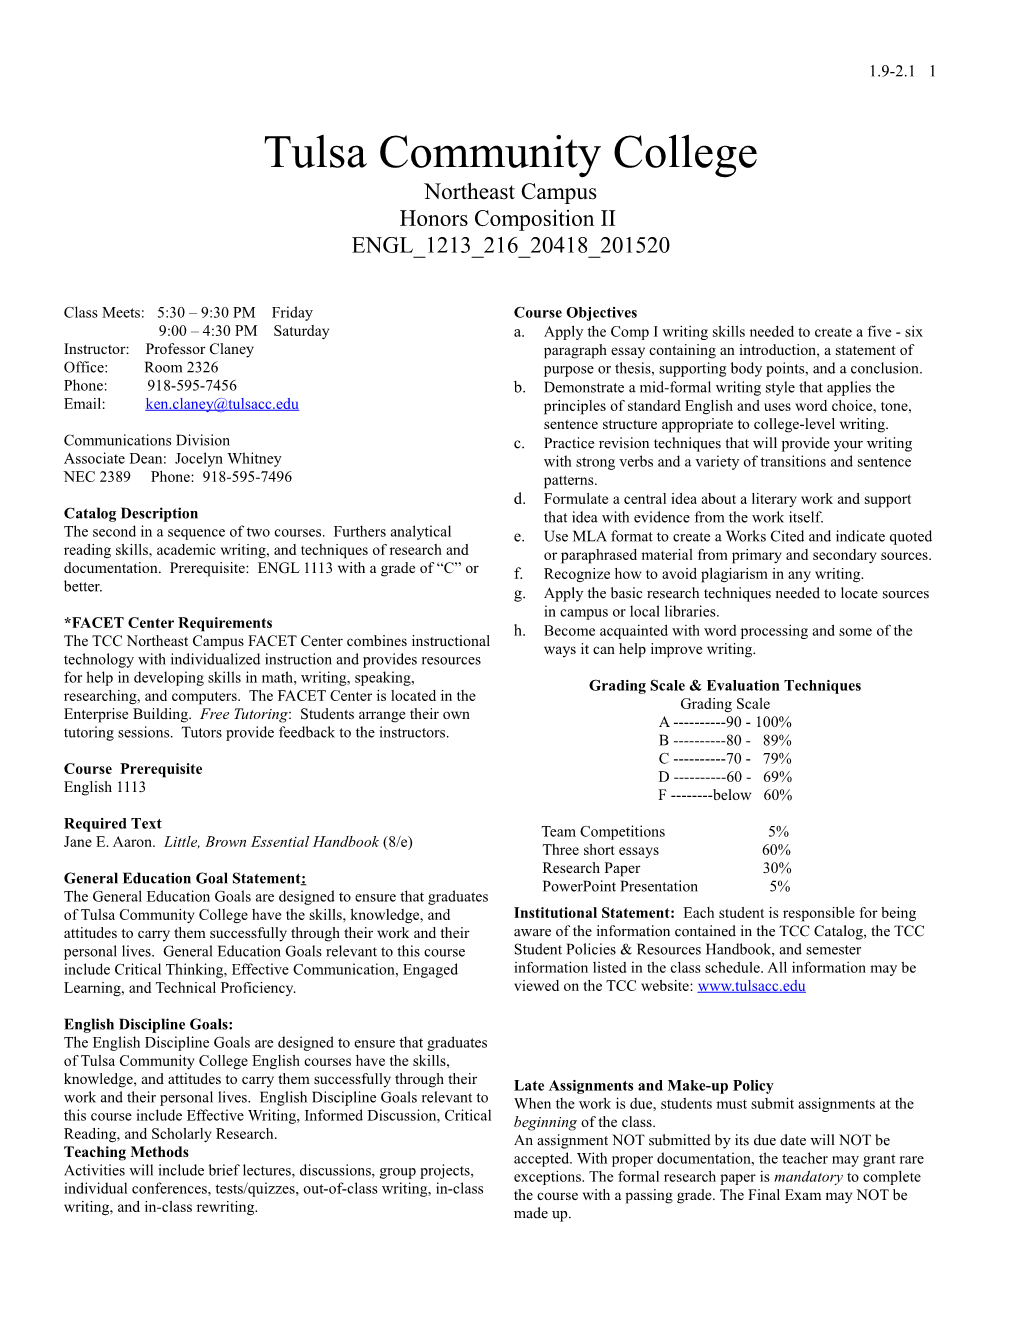 Tulsa Community College s1